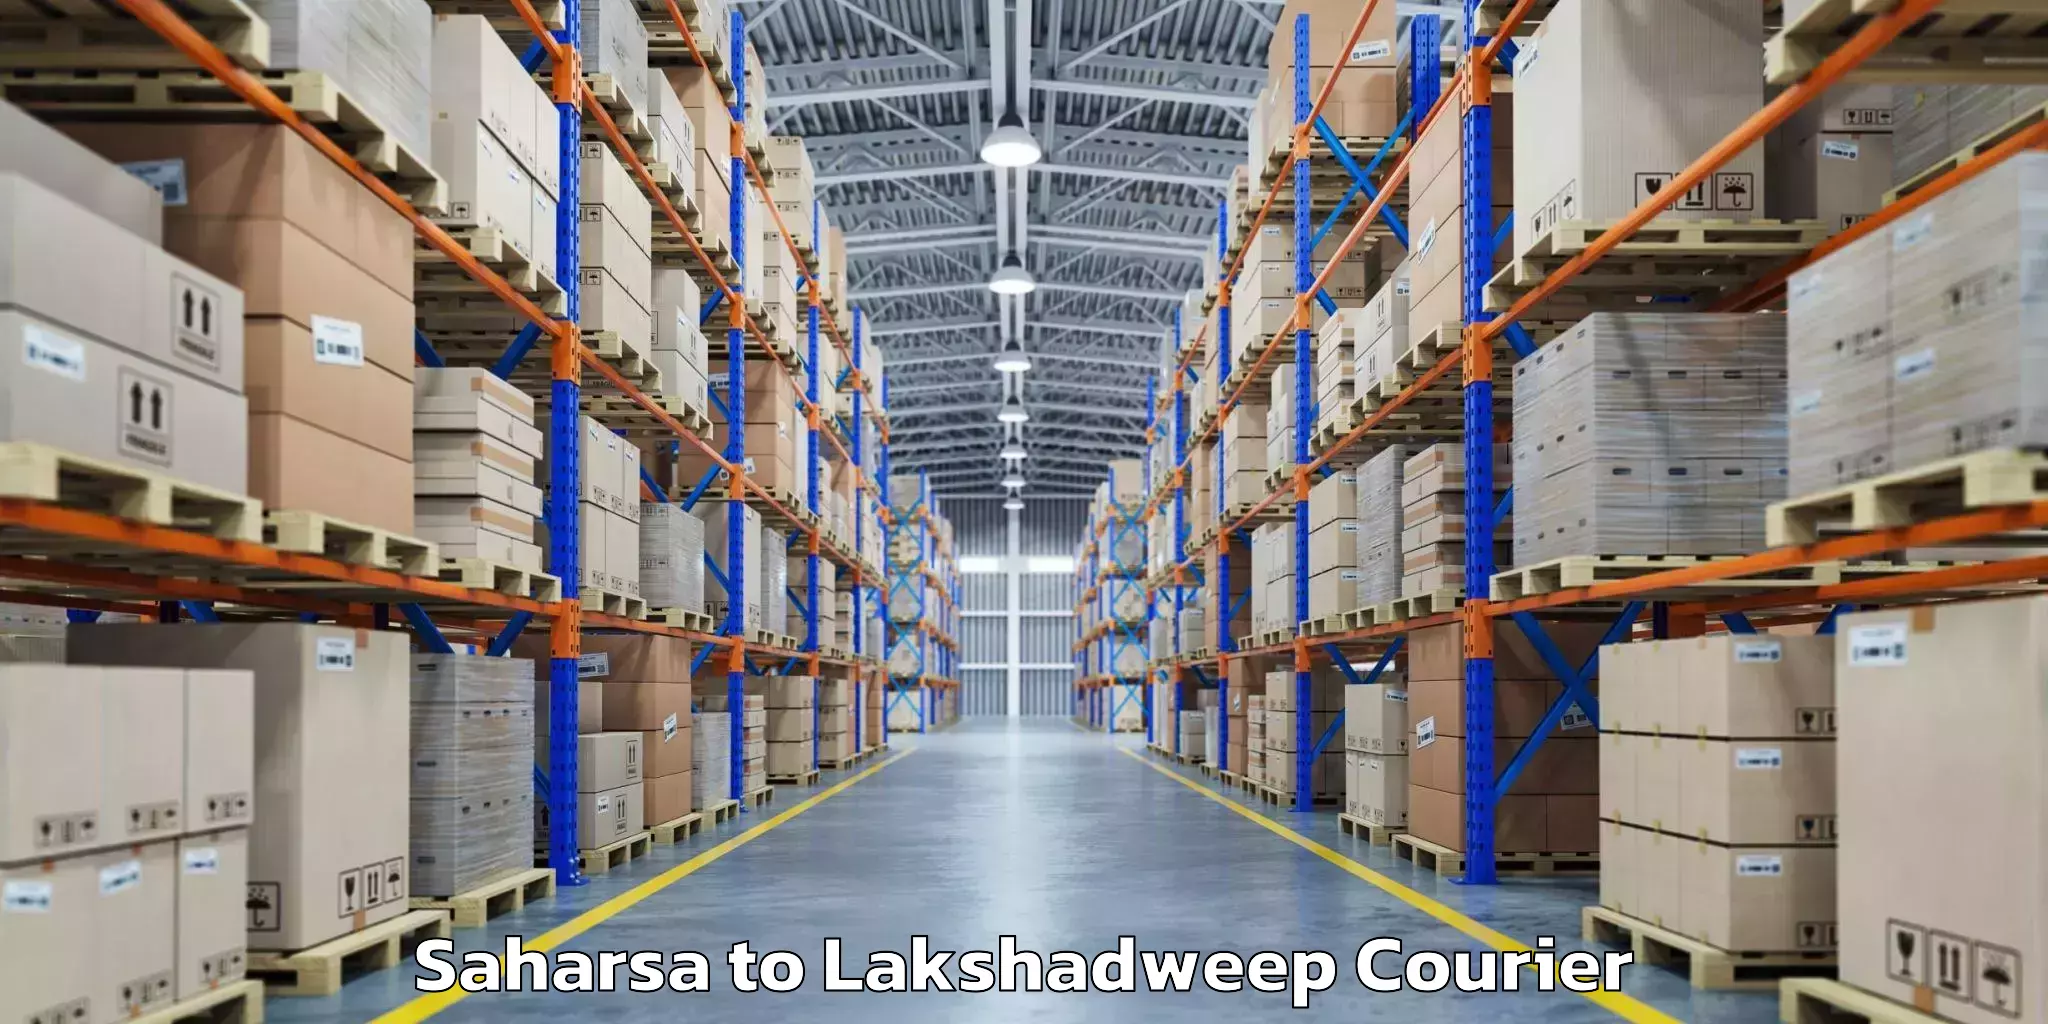 Luggage transfer service Saharsa to Lakshadweep